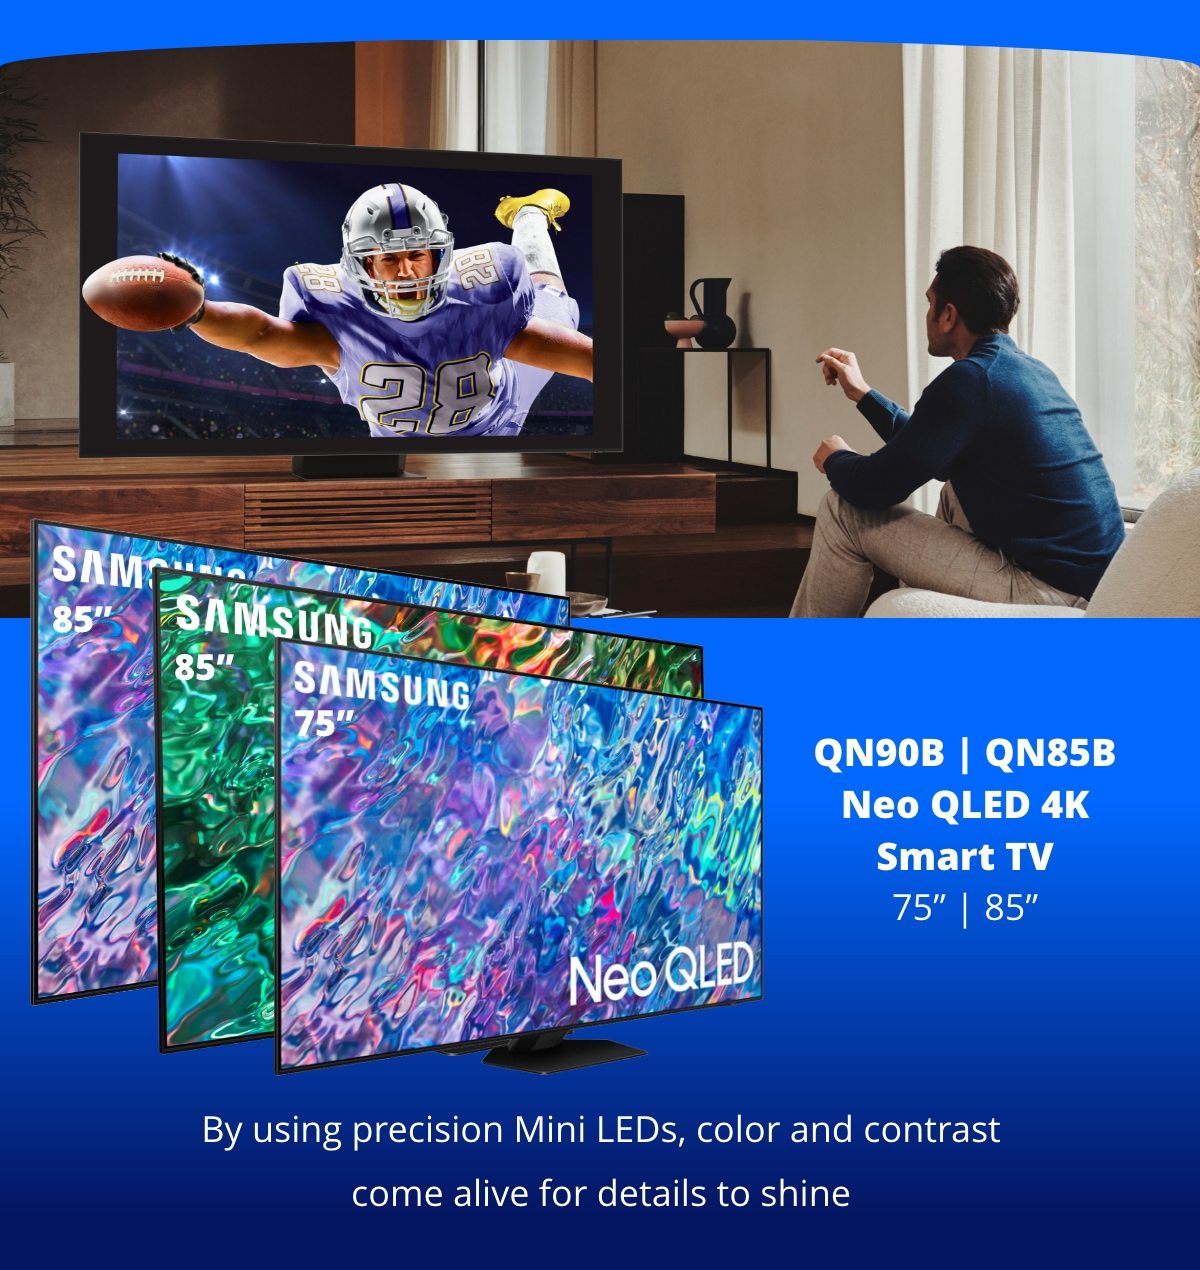 Save on Samsung Neo QLED 4K TVs